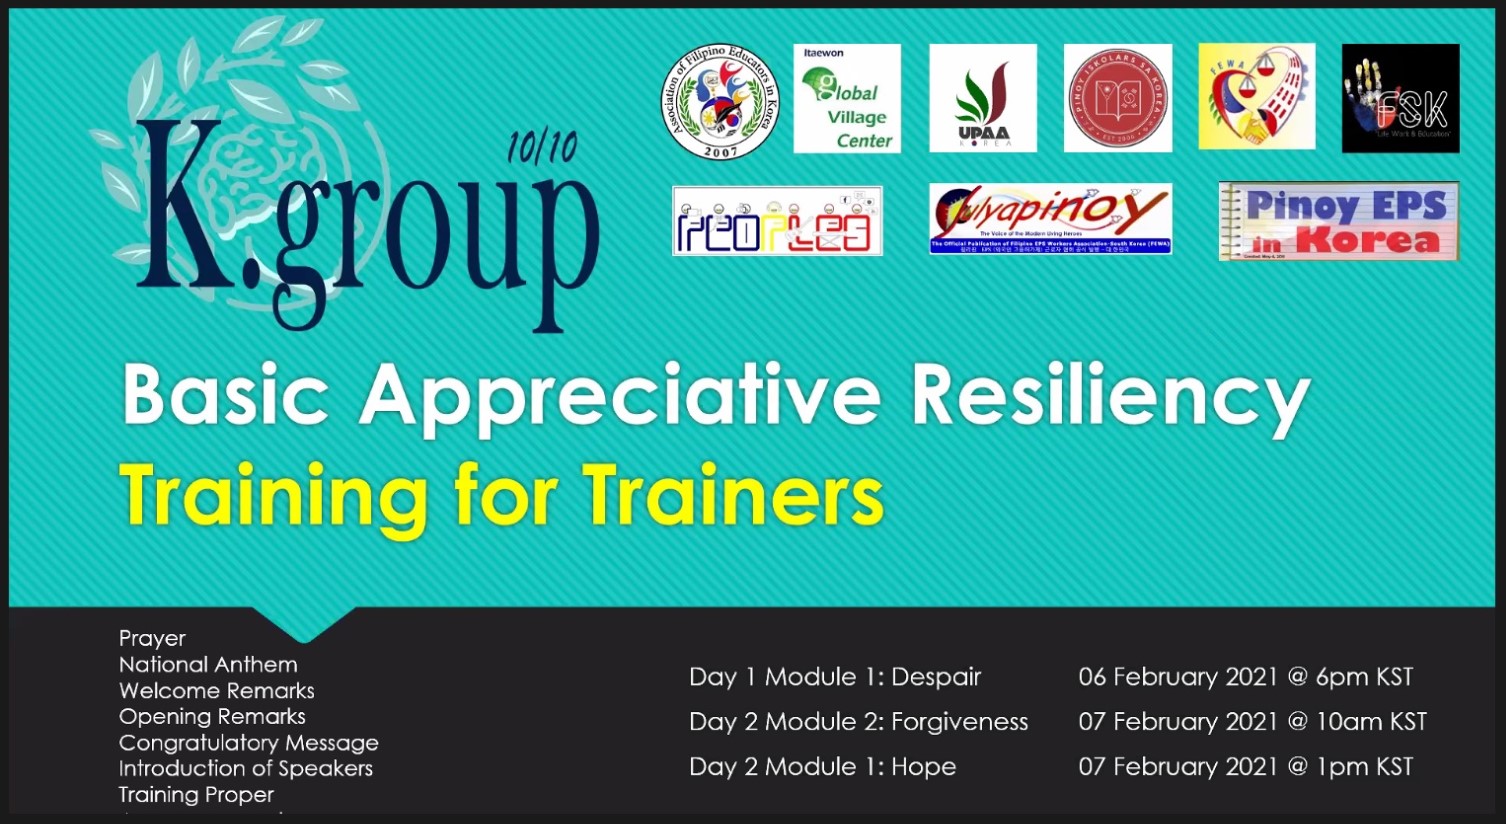 Basic Wellness Training Program by K-Group 10/10